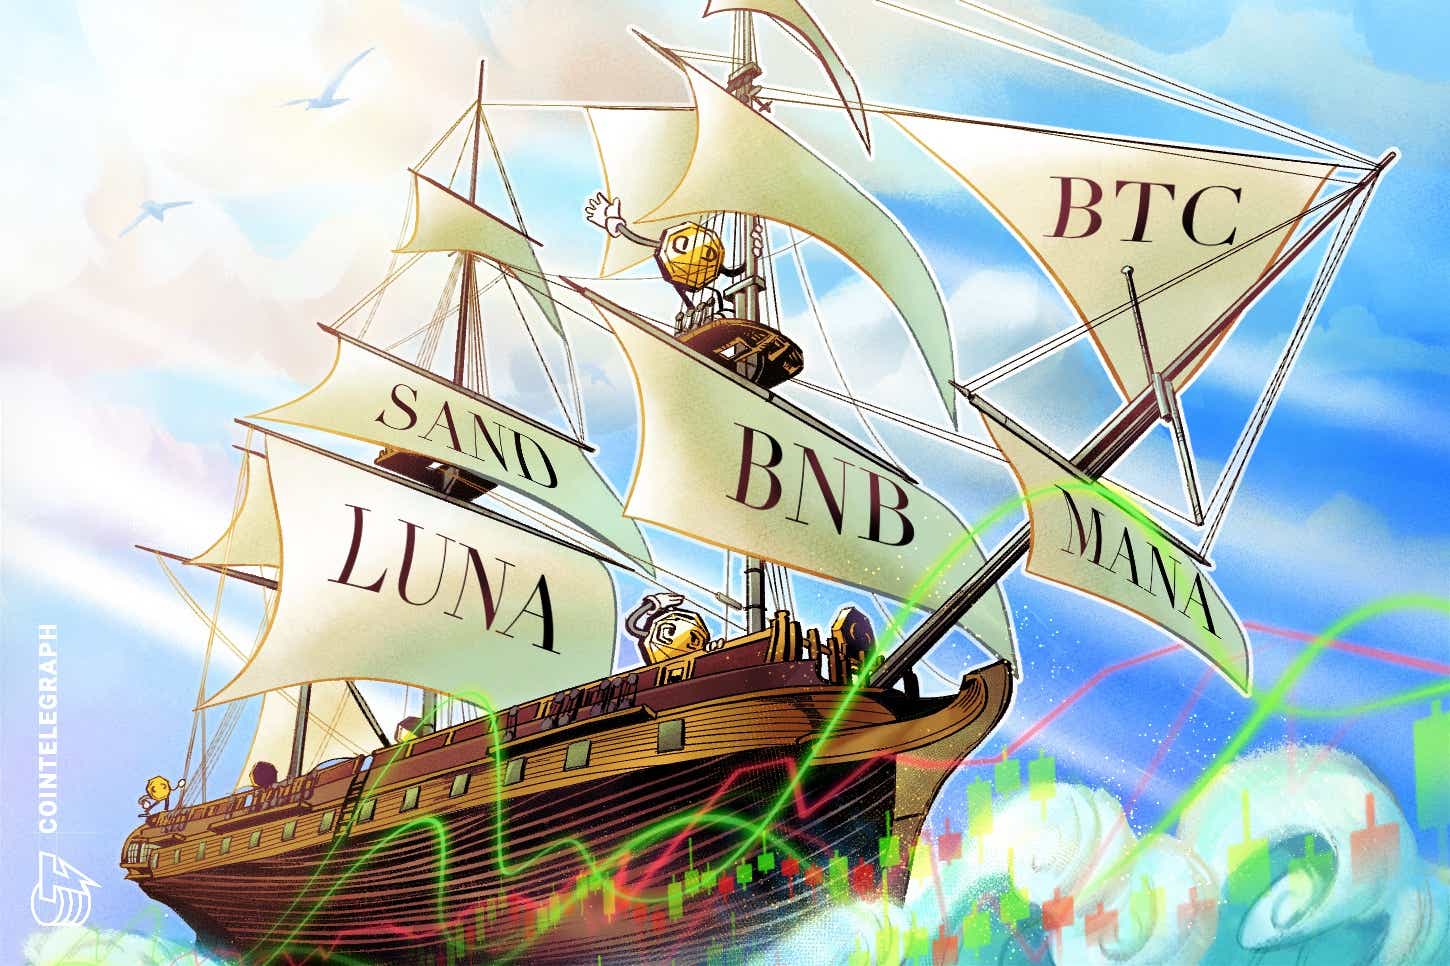 Top 5 cryptocurrencies to watch this week: BTC, BNB, LUNA, MANA, SAND